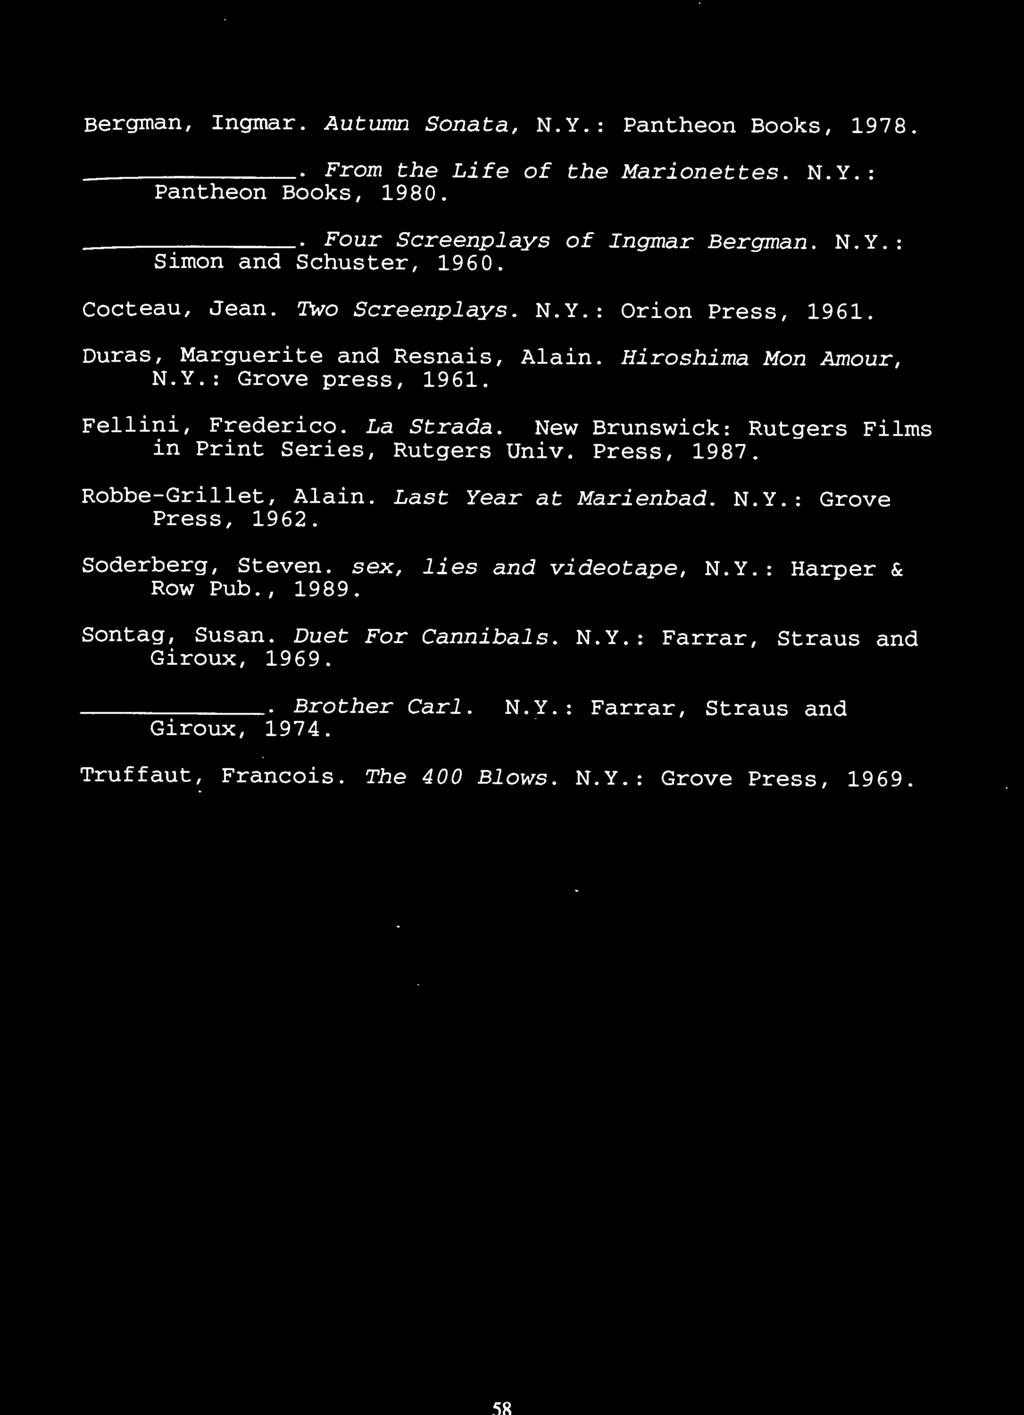 Bergman, Ingmar. Autumn Sonata, N.Y.: Pantheon Books, 1978. From the Life of the Marionettes. N.Y.: Pantheon Books, 1980. ~~~~~~~~- Four Screenplays of Ingmar Bergman. N. Y.: Simon and Schuster, 1960.